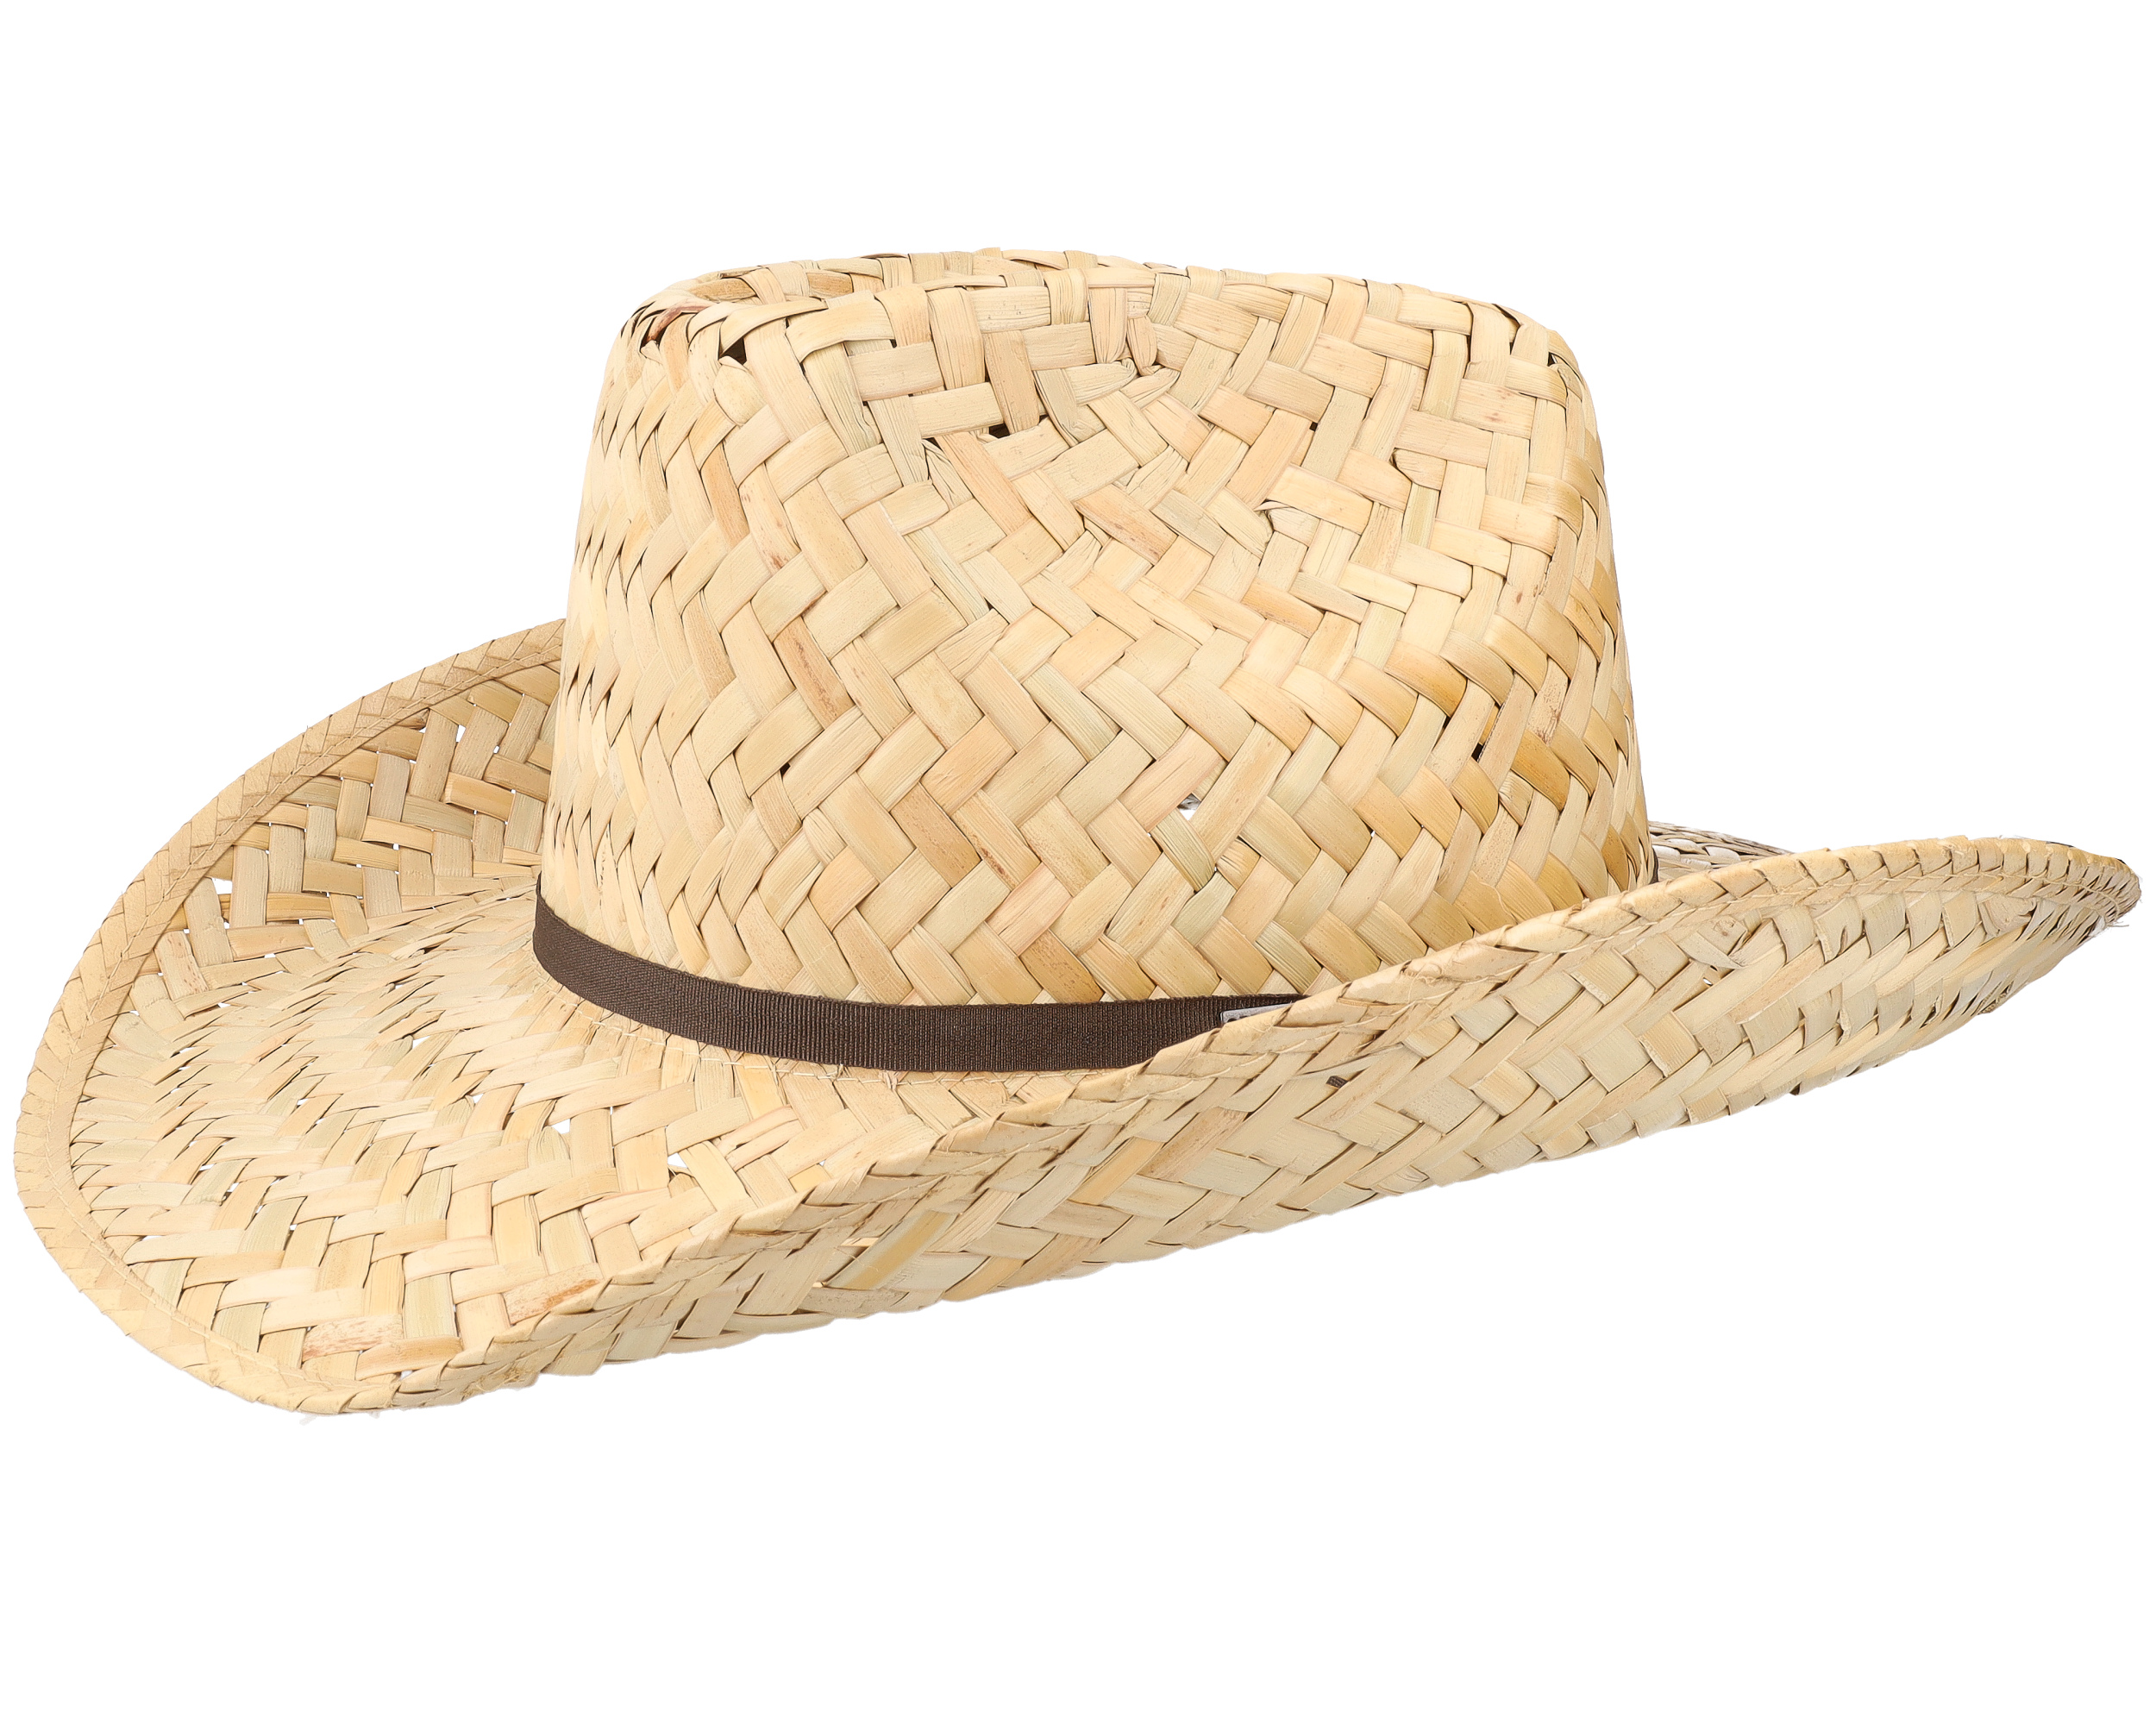 Brixton - Houston Straw Cowboy Hat - Natural - L/XL